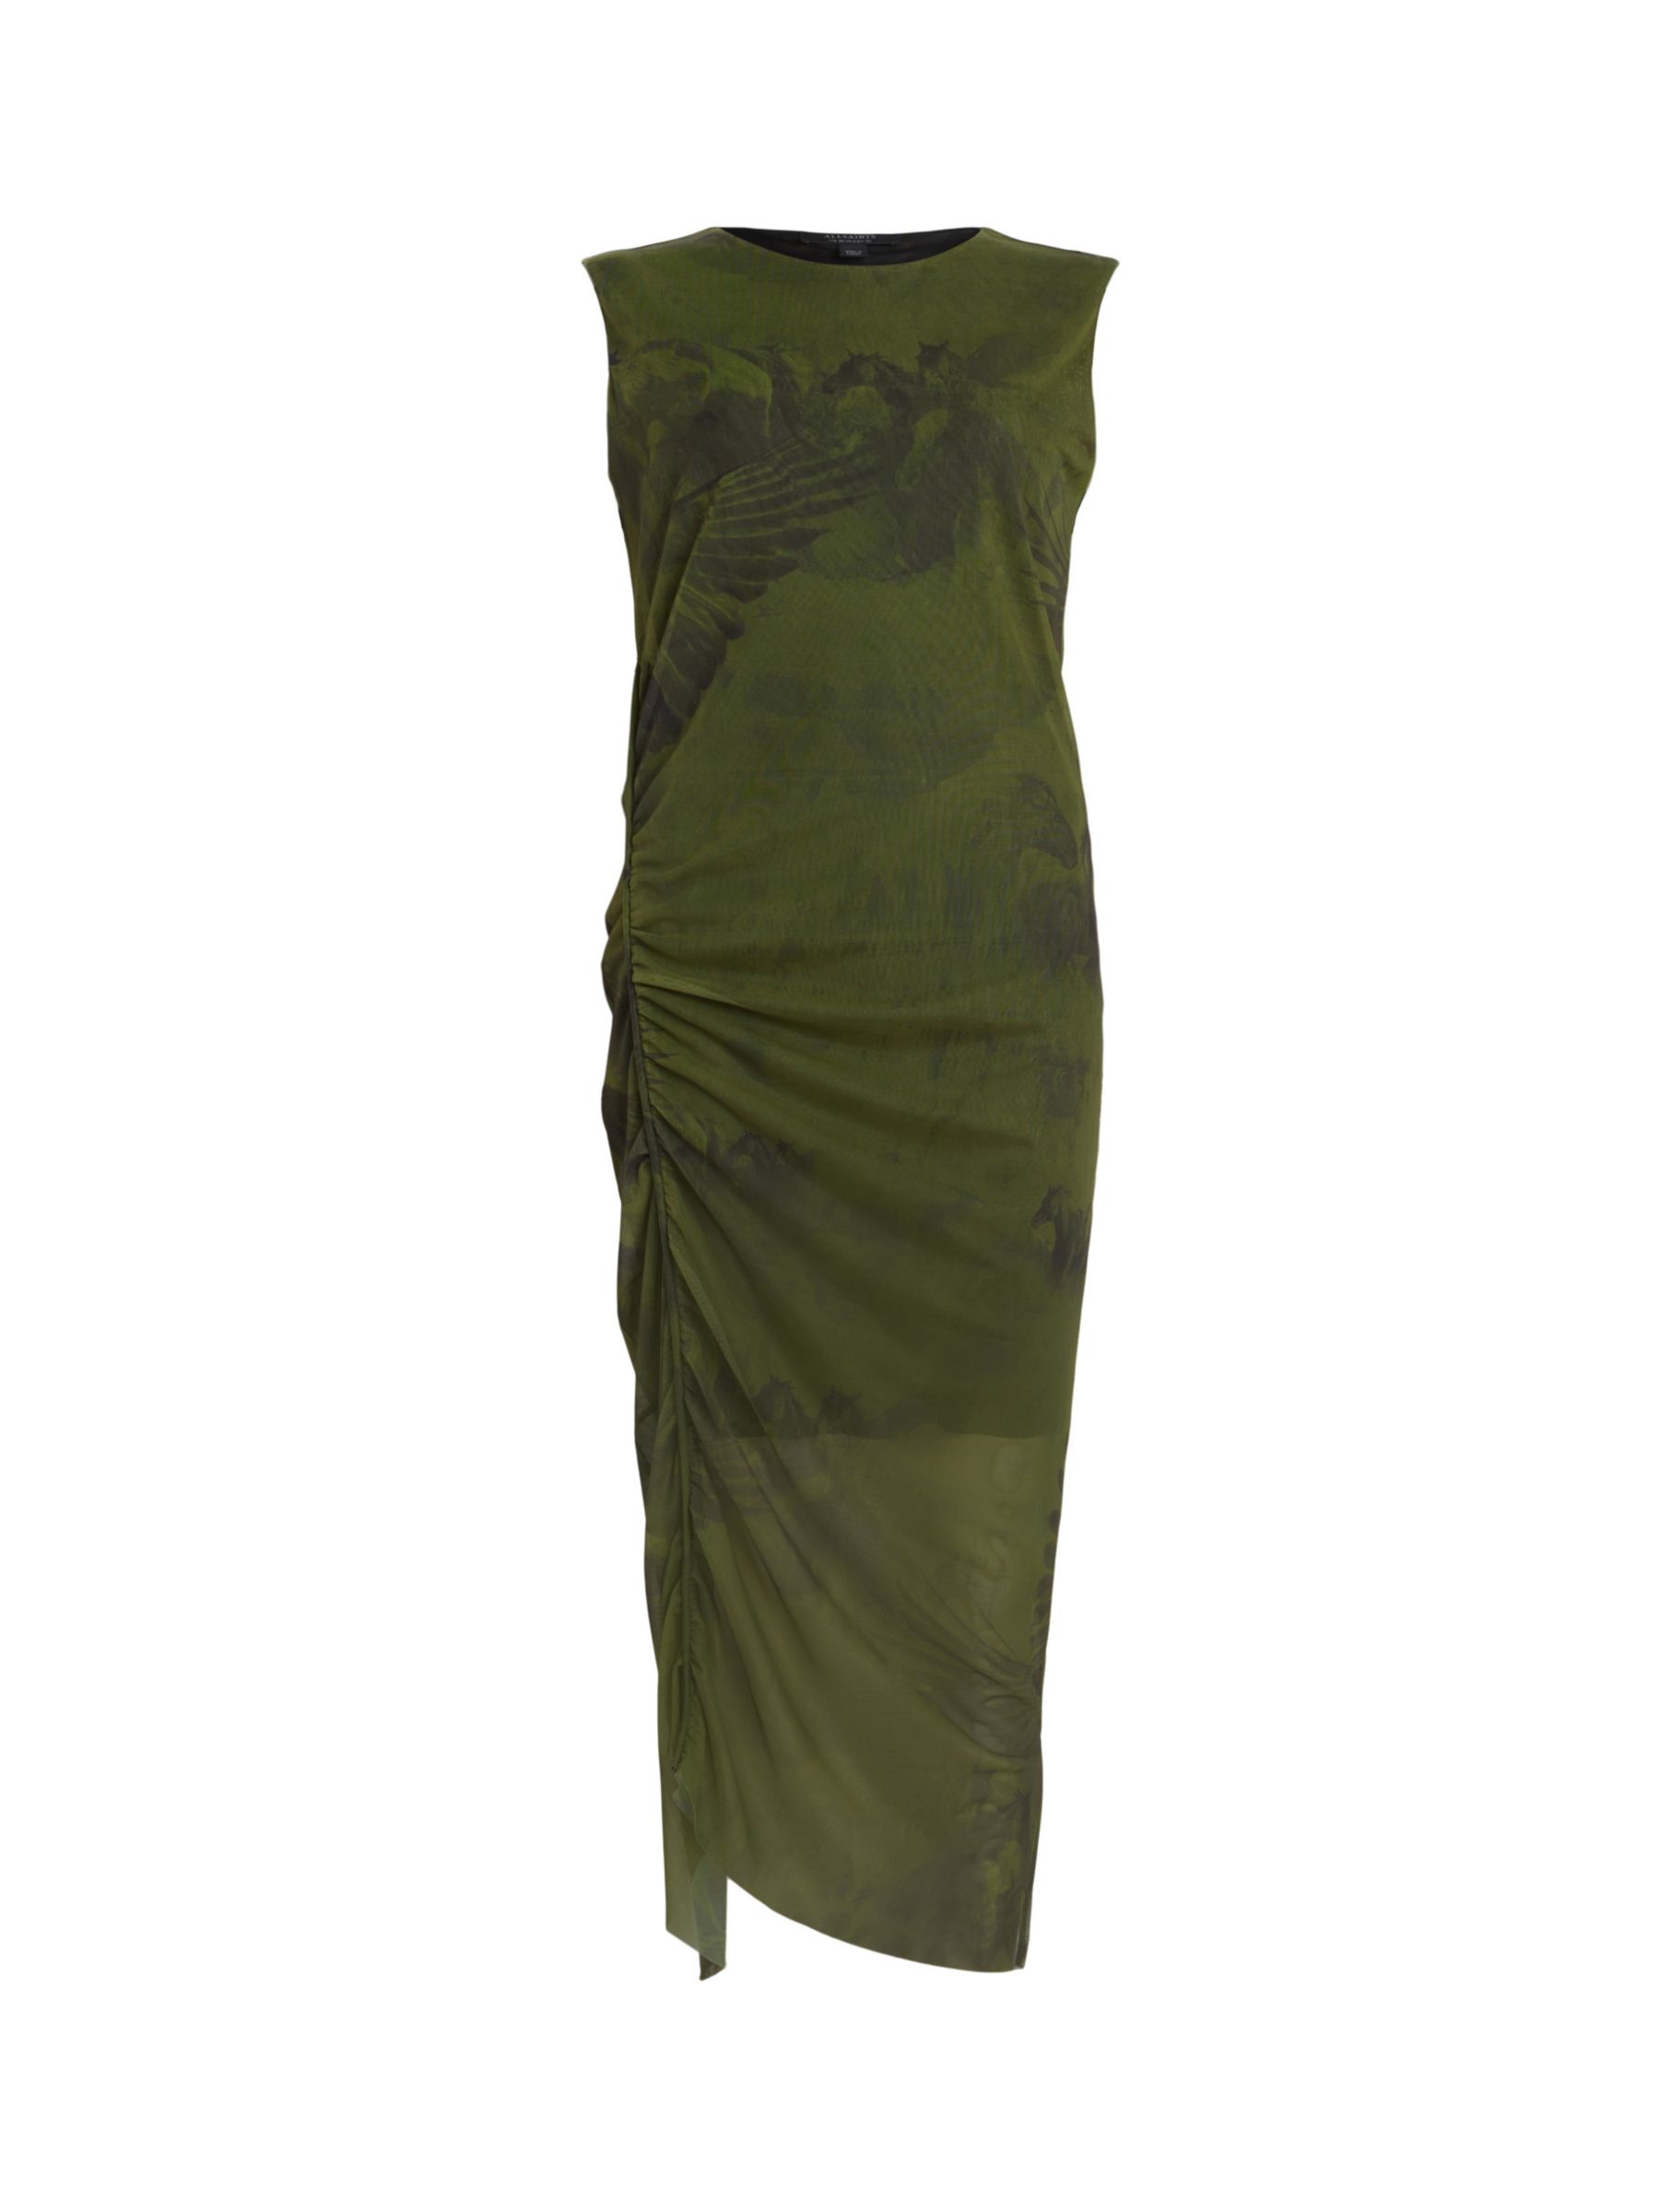 AllSaints Nora Colca Dress, Olive Green, 6